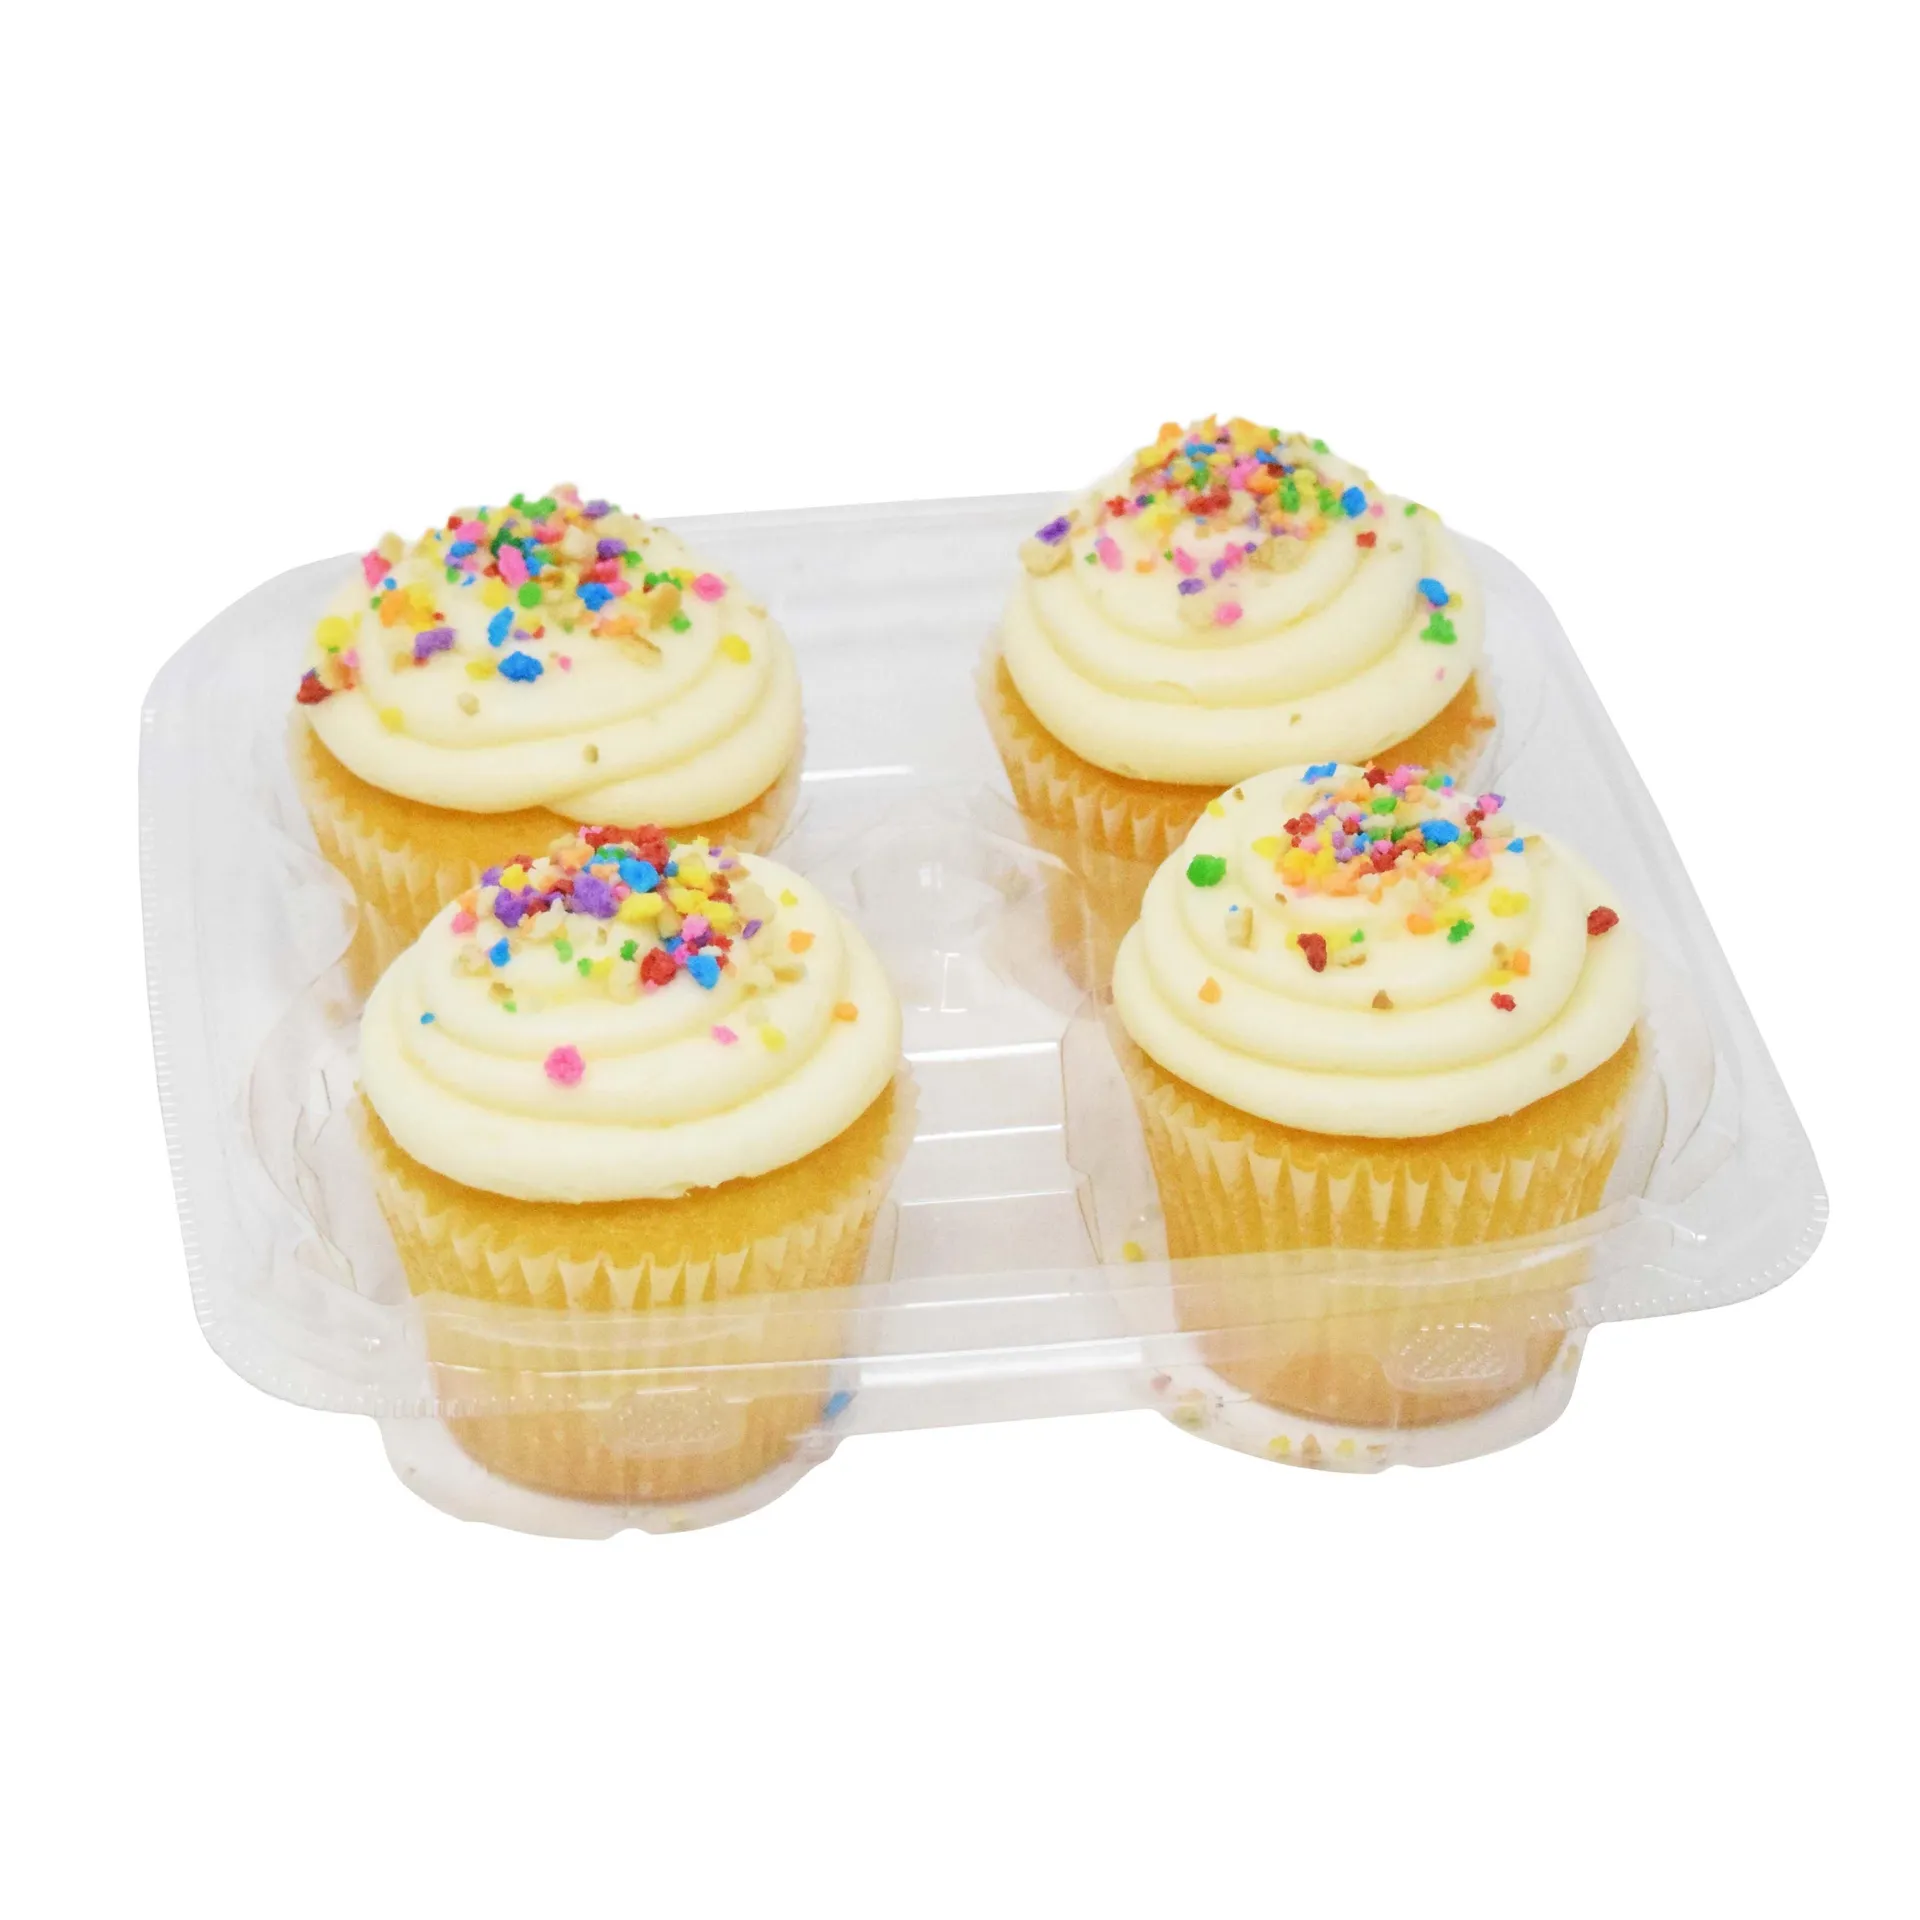 H‑E‑B Bakery Sensational Birthday Cake Cupcakes